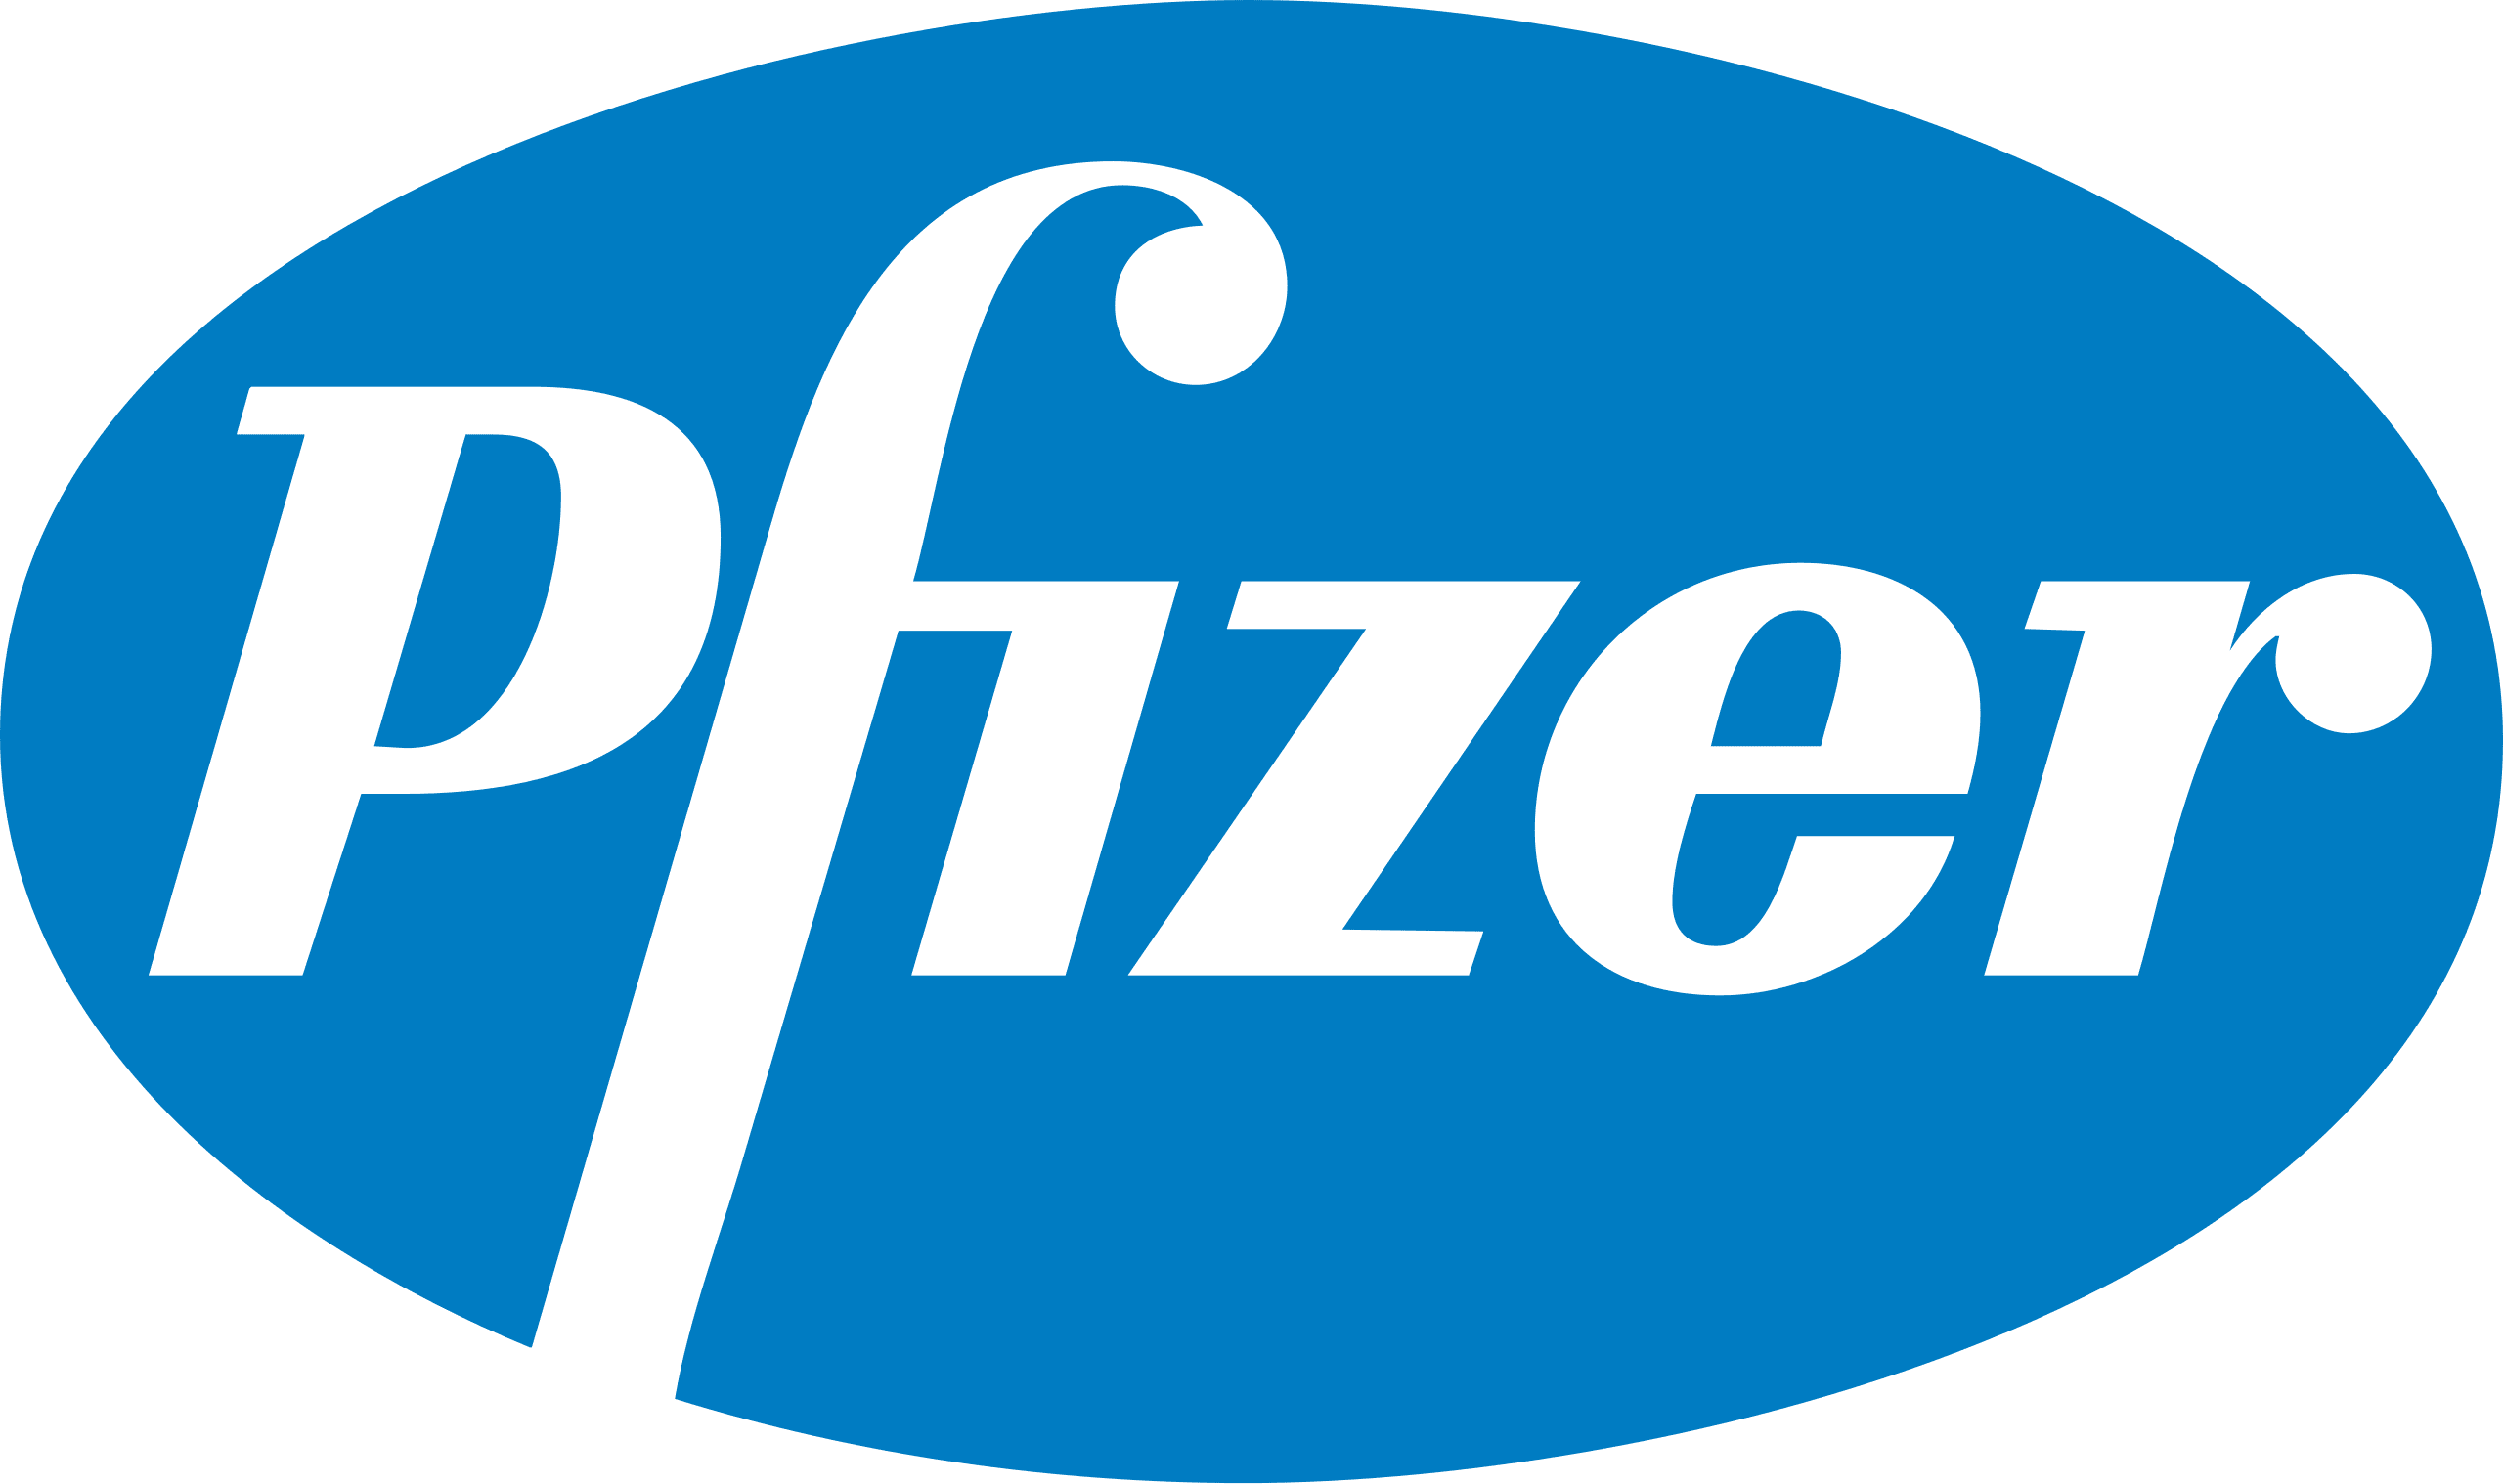 Pfizer_logo.svg